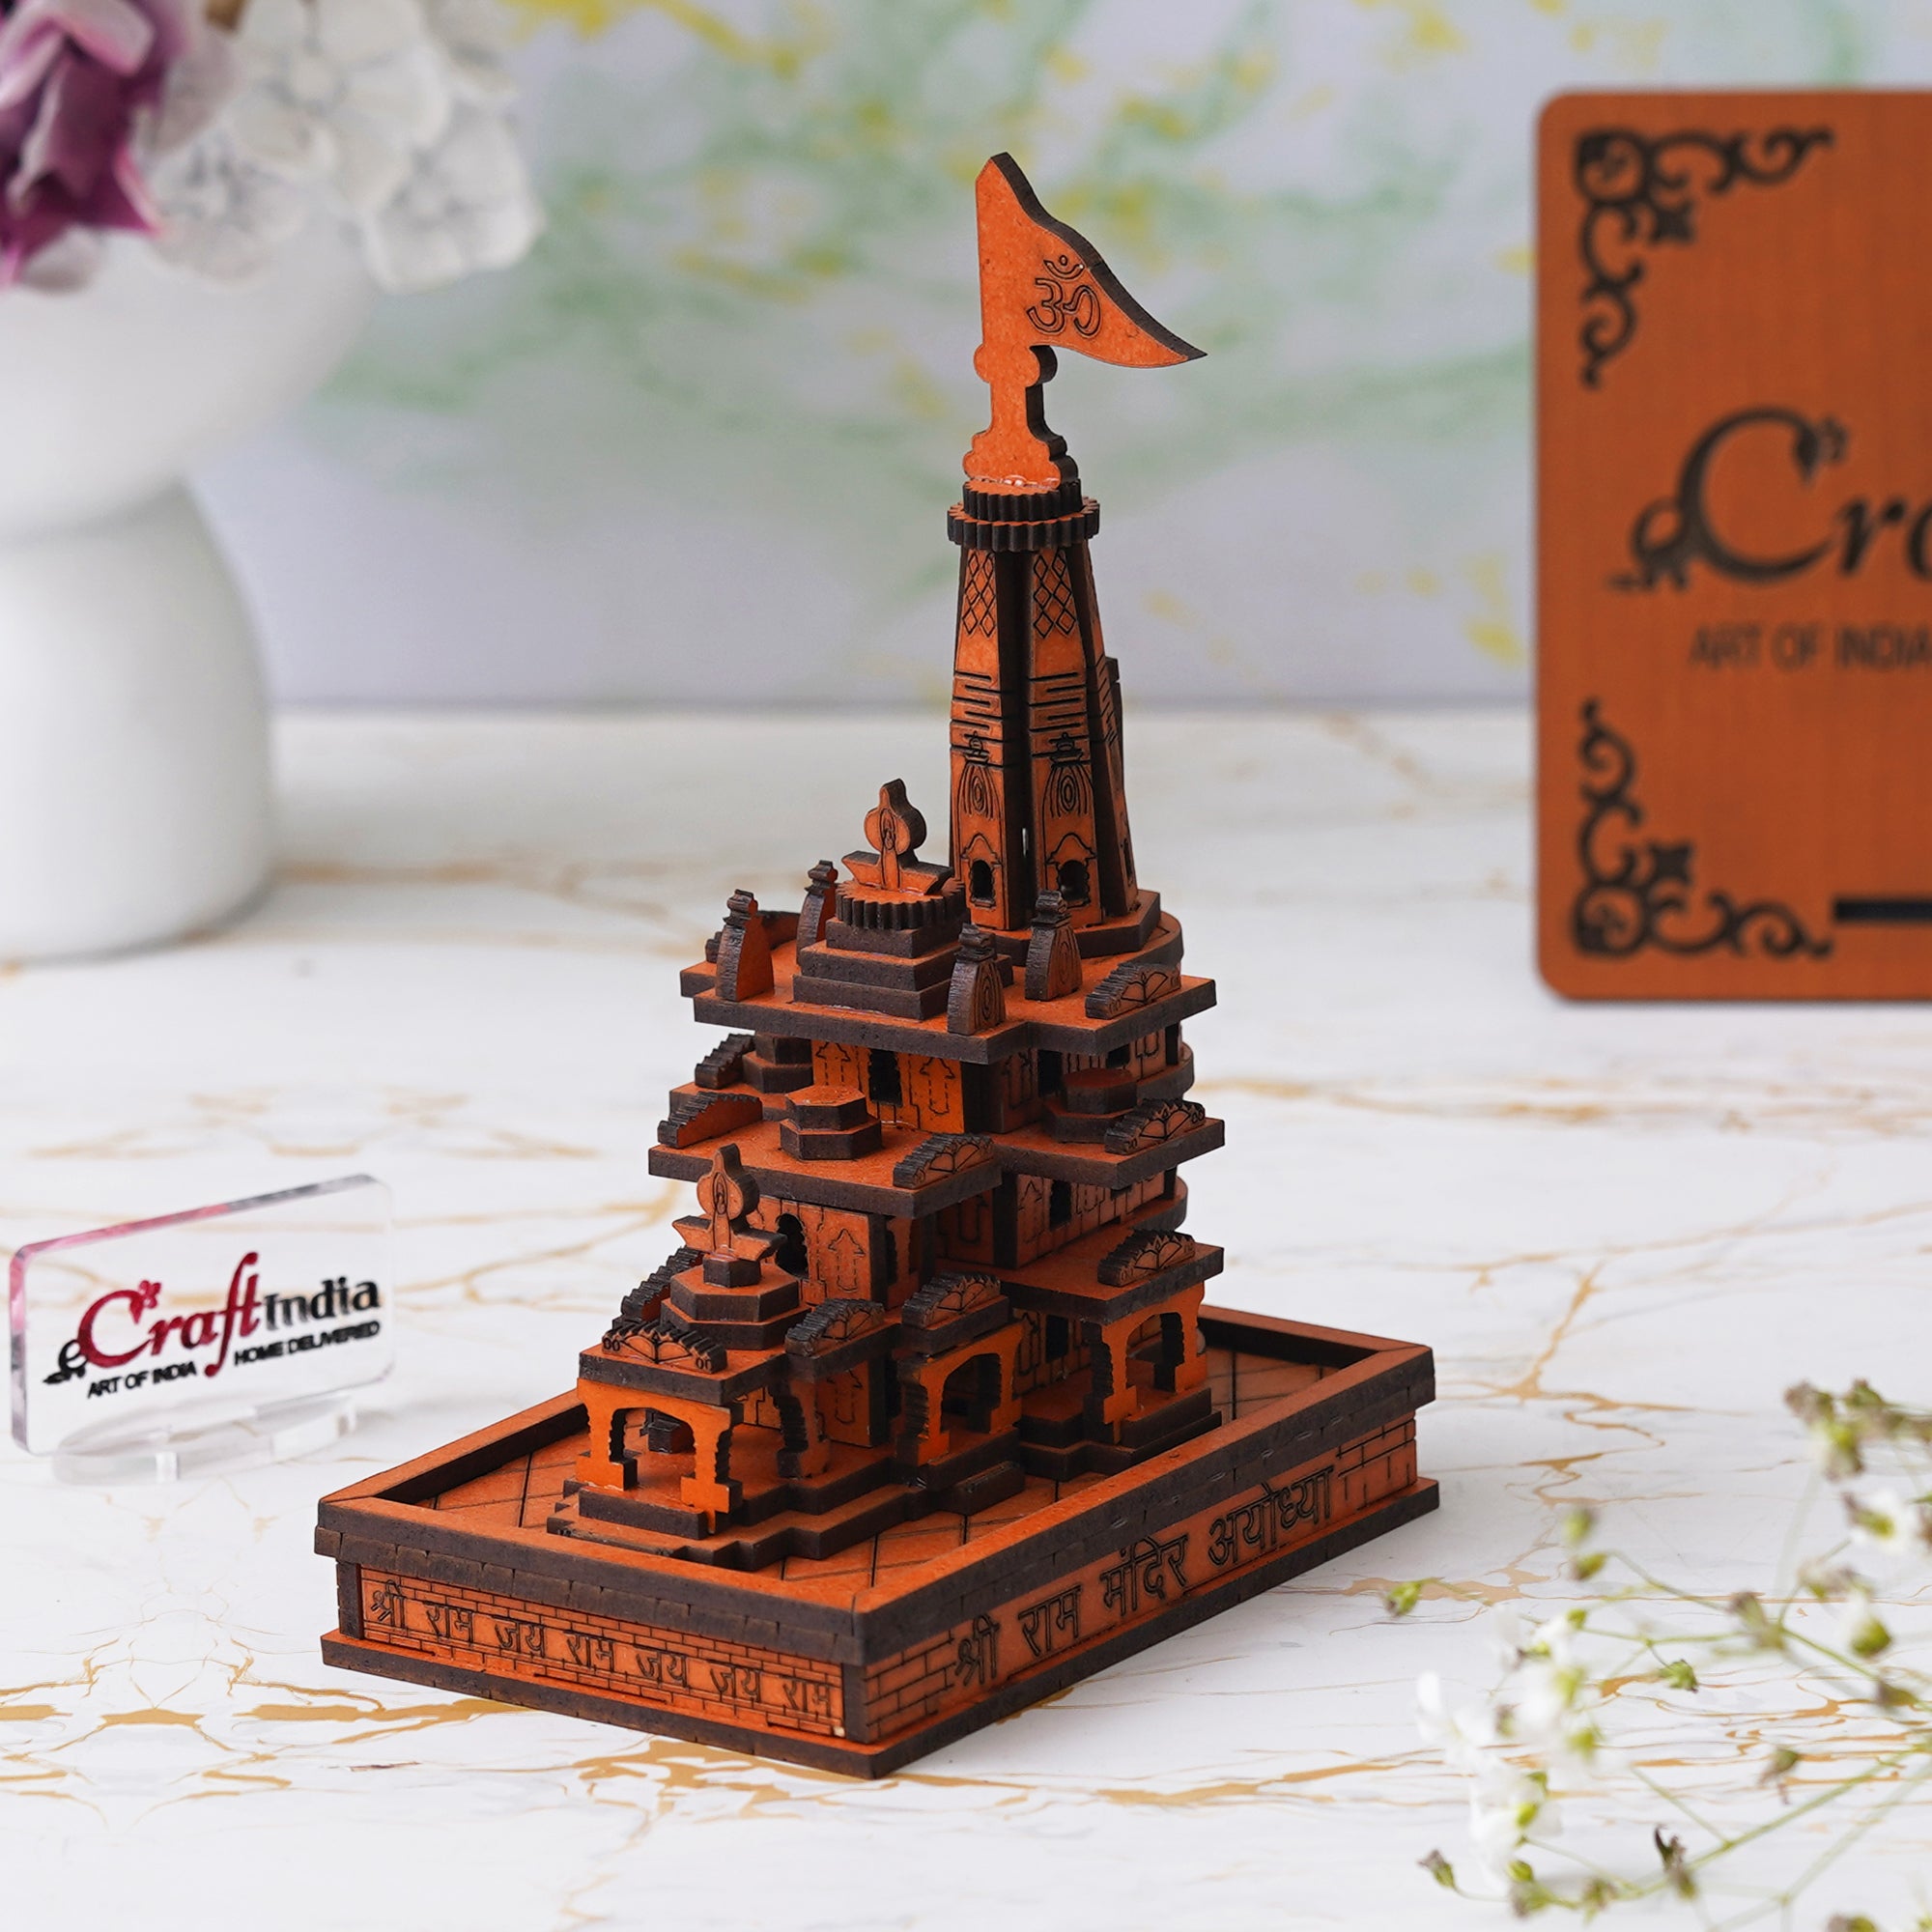 eCraftIndia Shri Ram Mandir Ayodhya Model - Wooden MDF Craftsmanship Authentic Designer Temple - Ideal for Home Temple, Decor, and Spiritual Gifting (Orange, Brown) 1